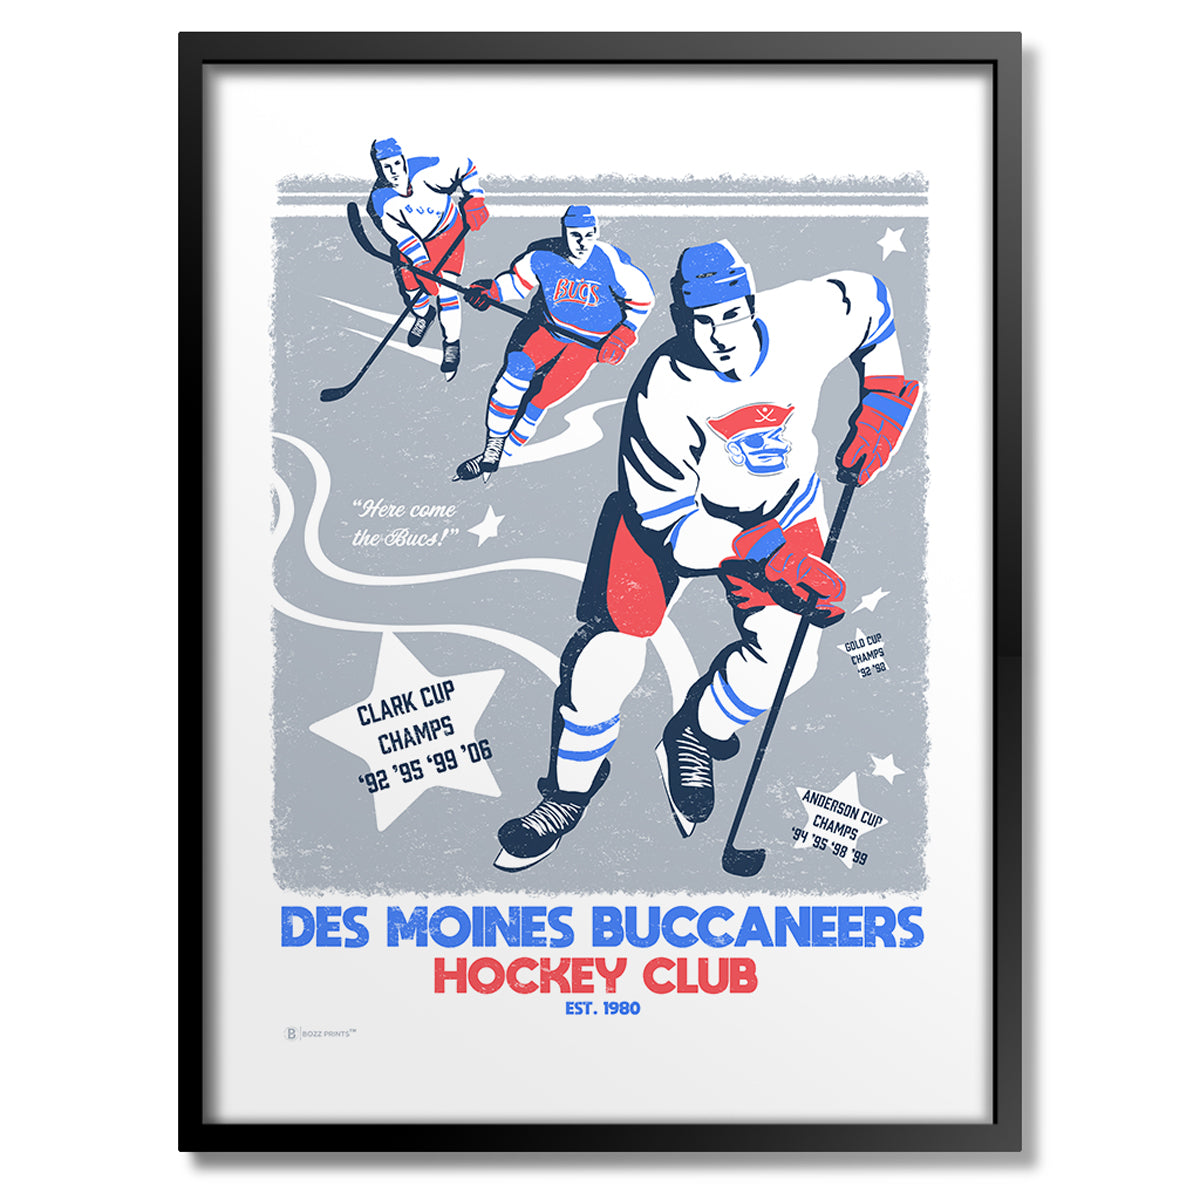 Here Come the Des Moines Buccaneers Print - Bozz Prints